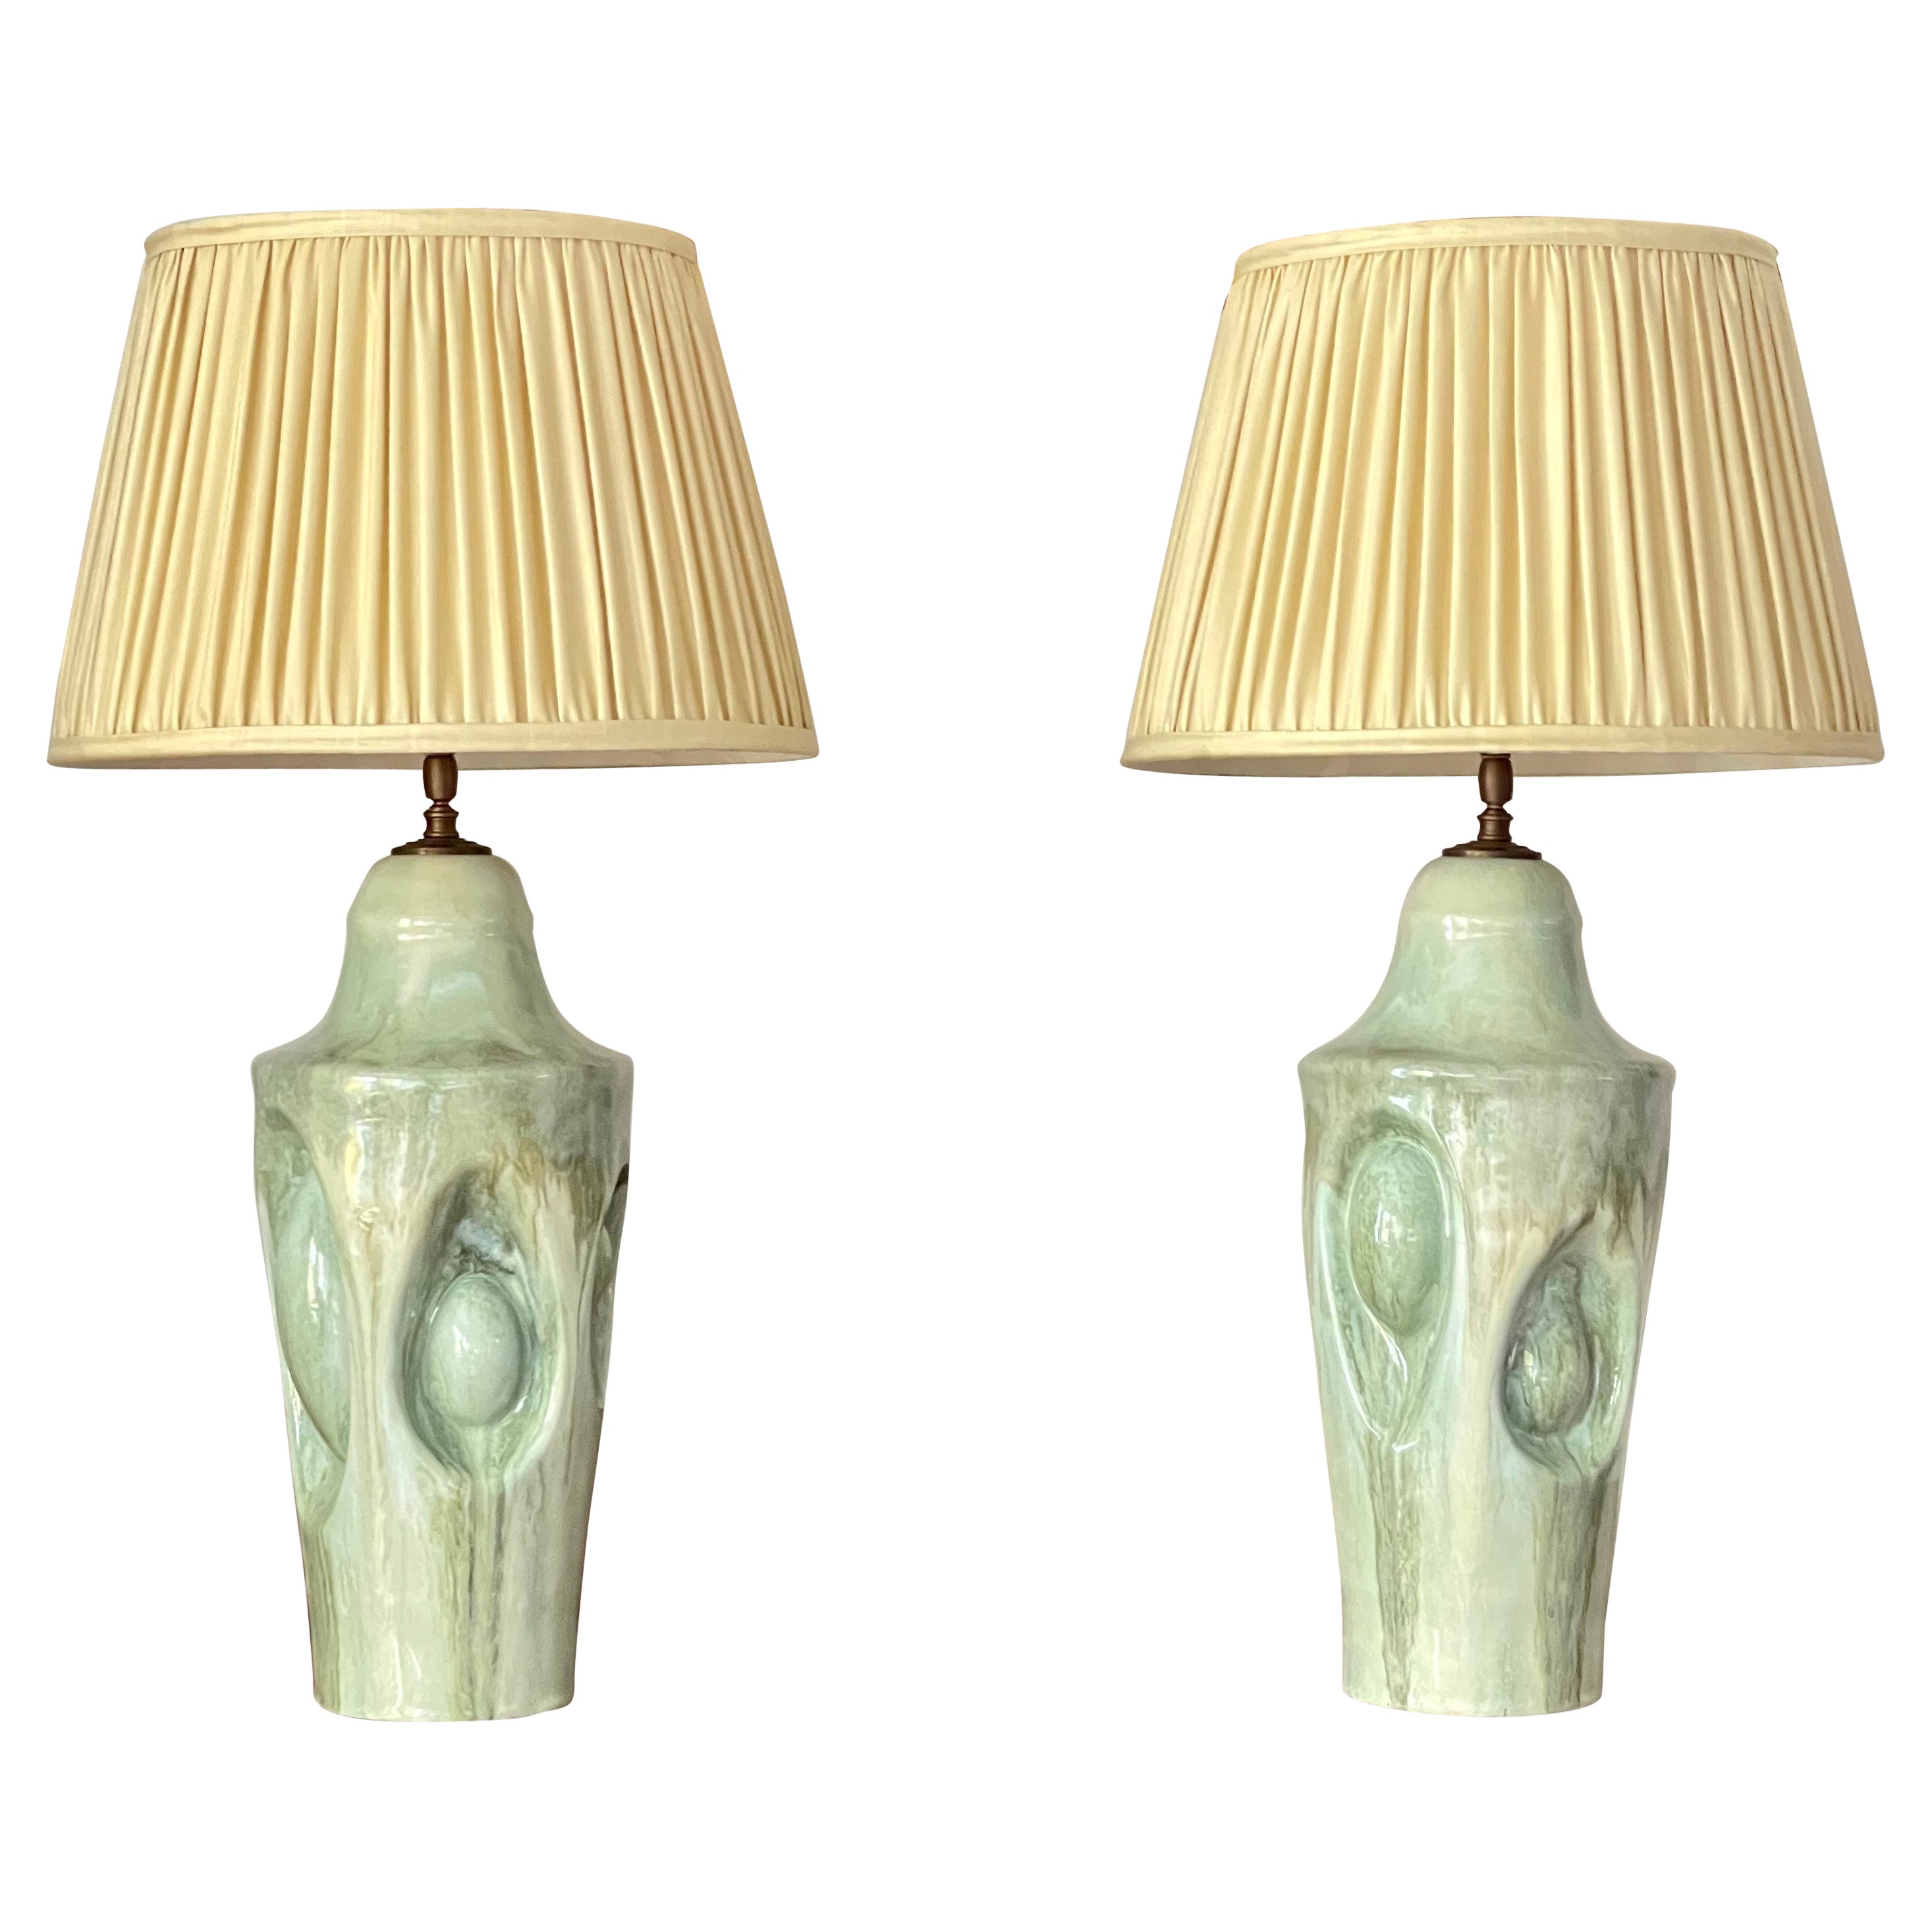 Pair of Table Lamps - Handmade Ceramic Unique Pieces Contemporary 21st Century For Sale